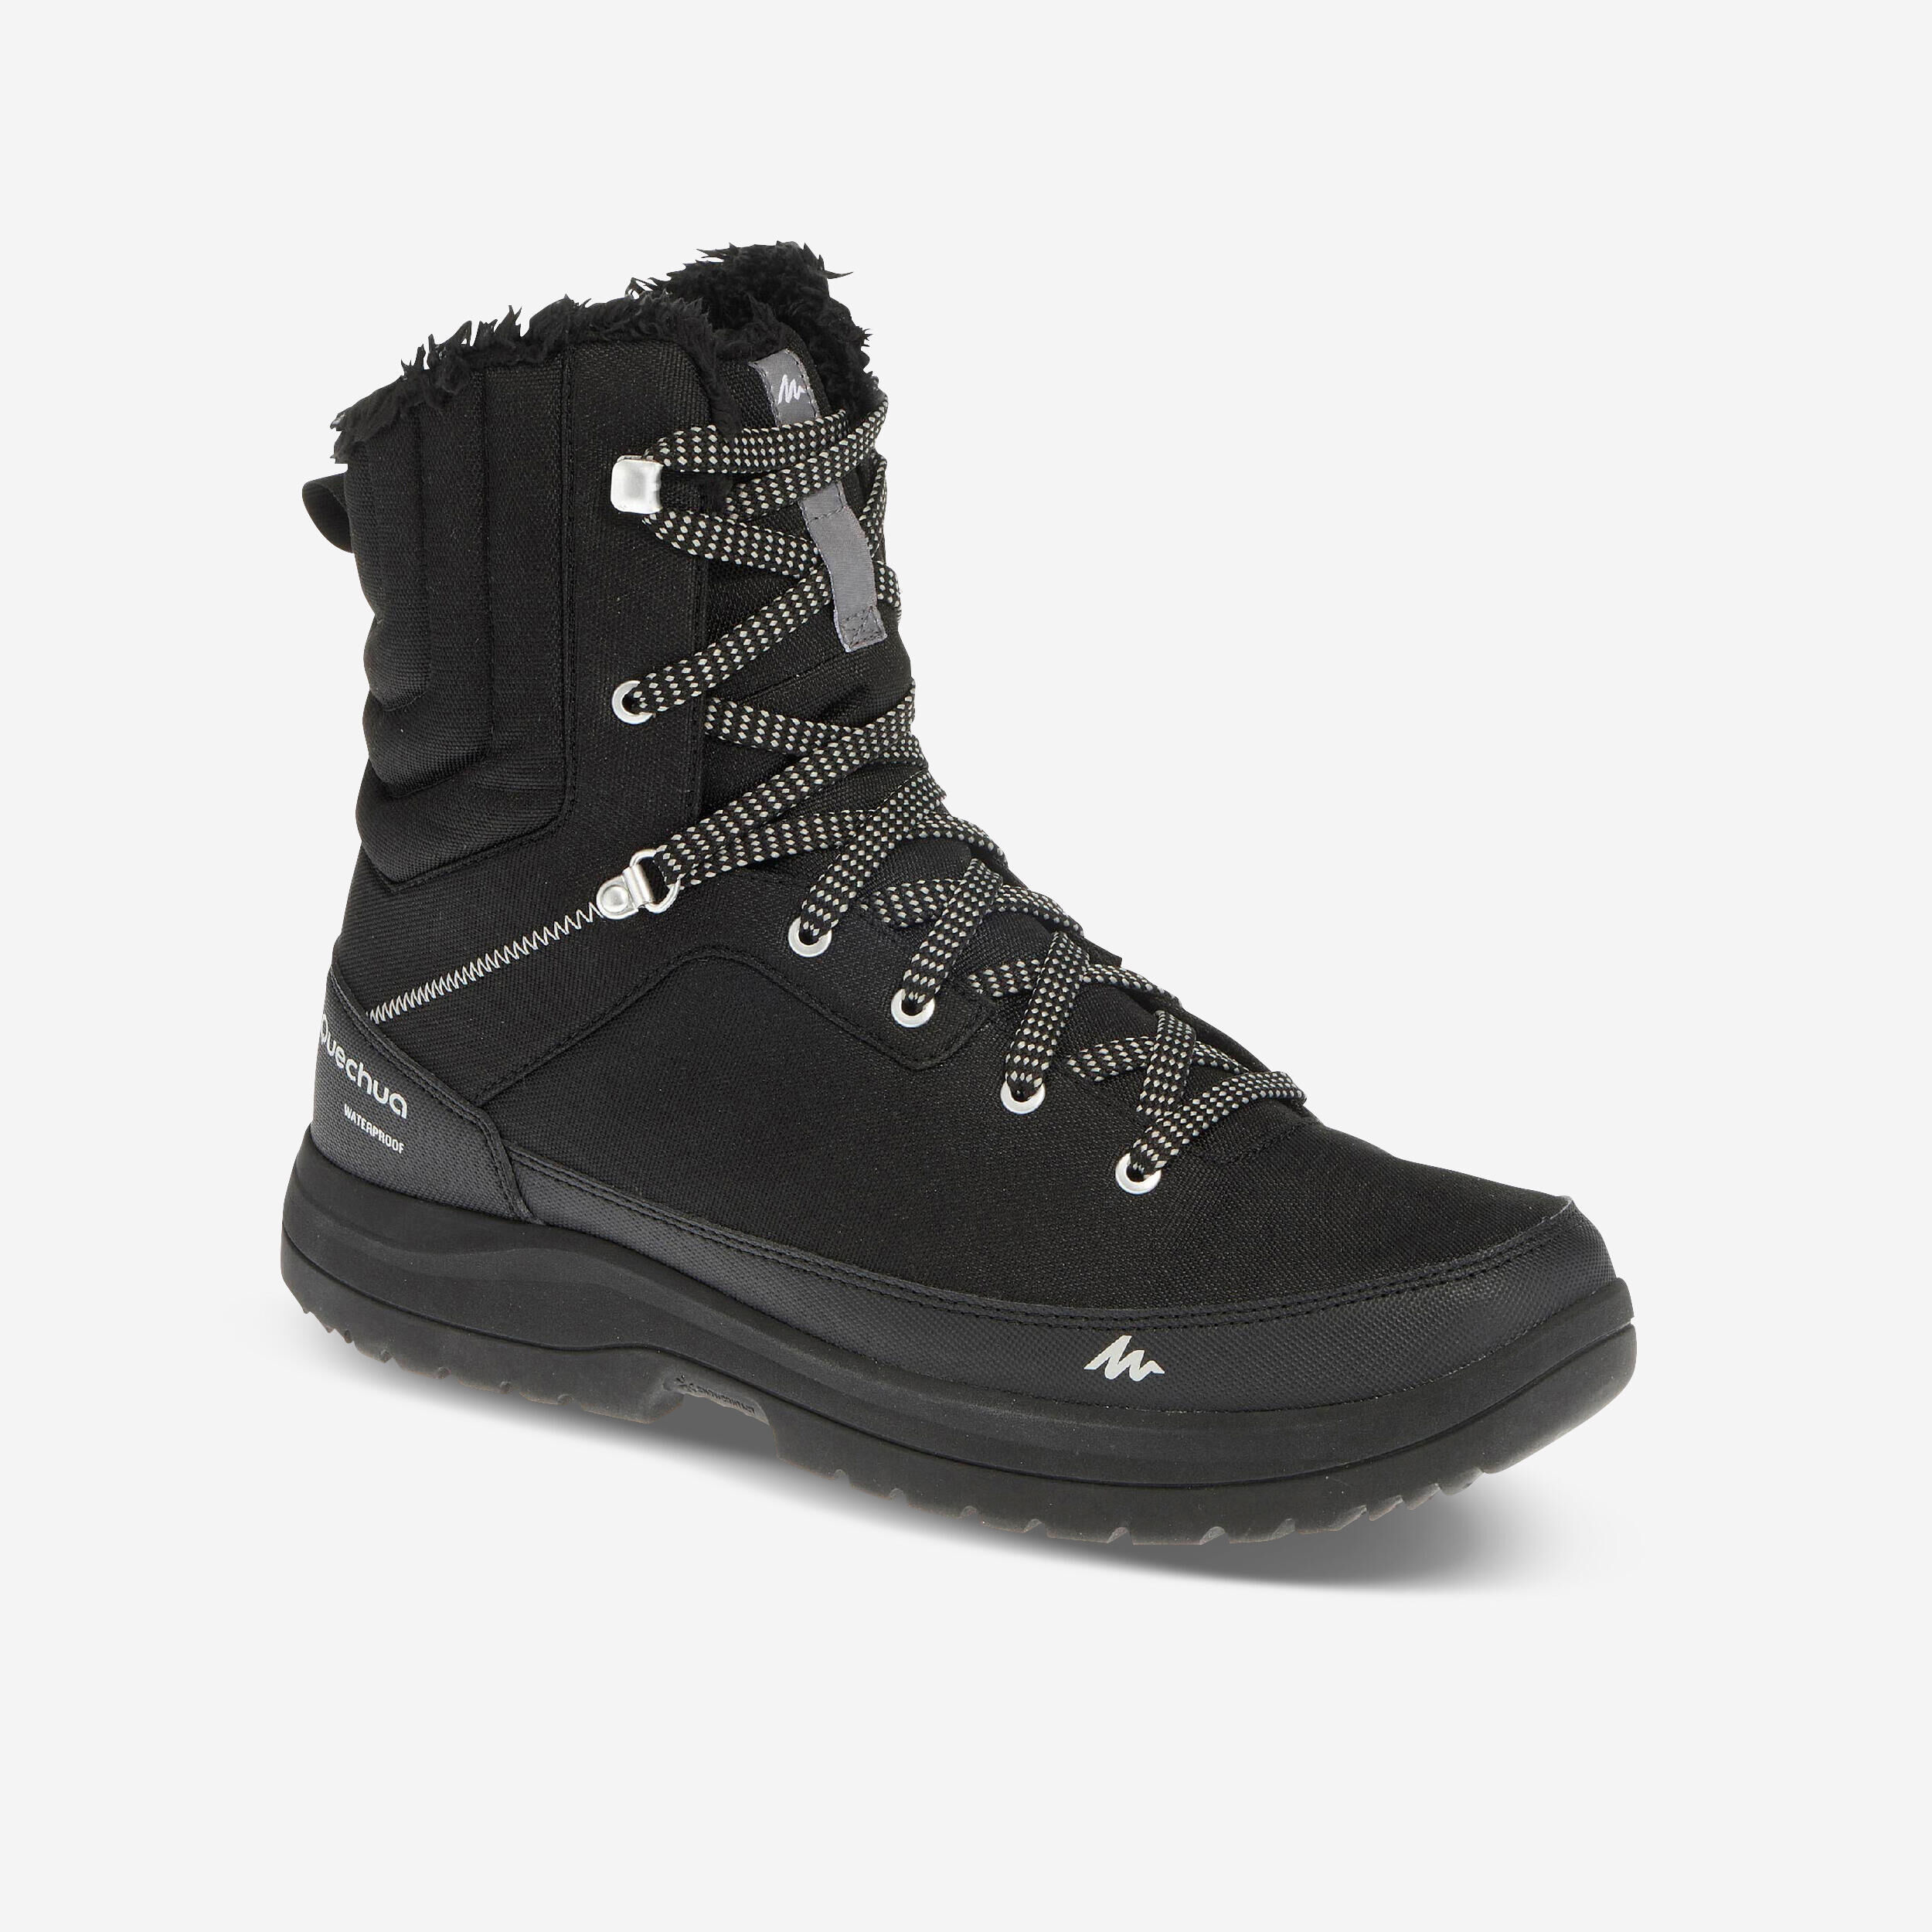 QUECHUA Men’s Warm and Waterproof Hiking Boots - SH100 High